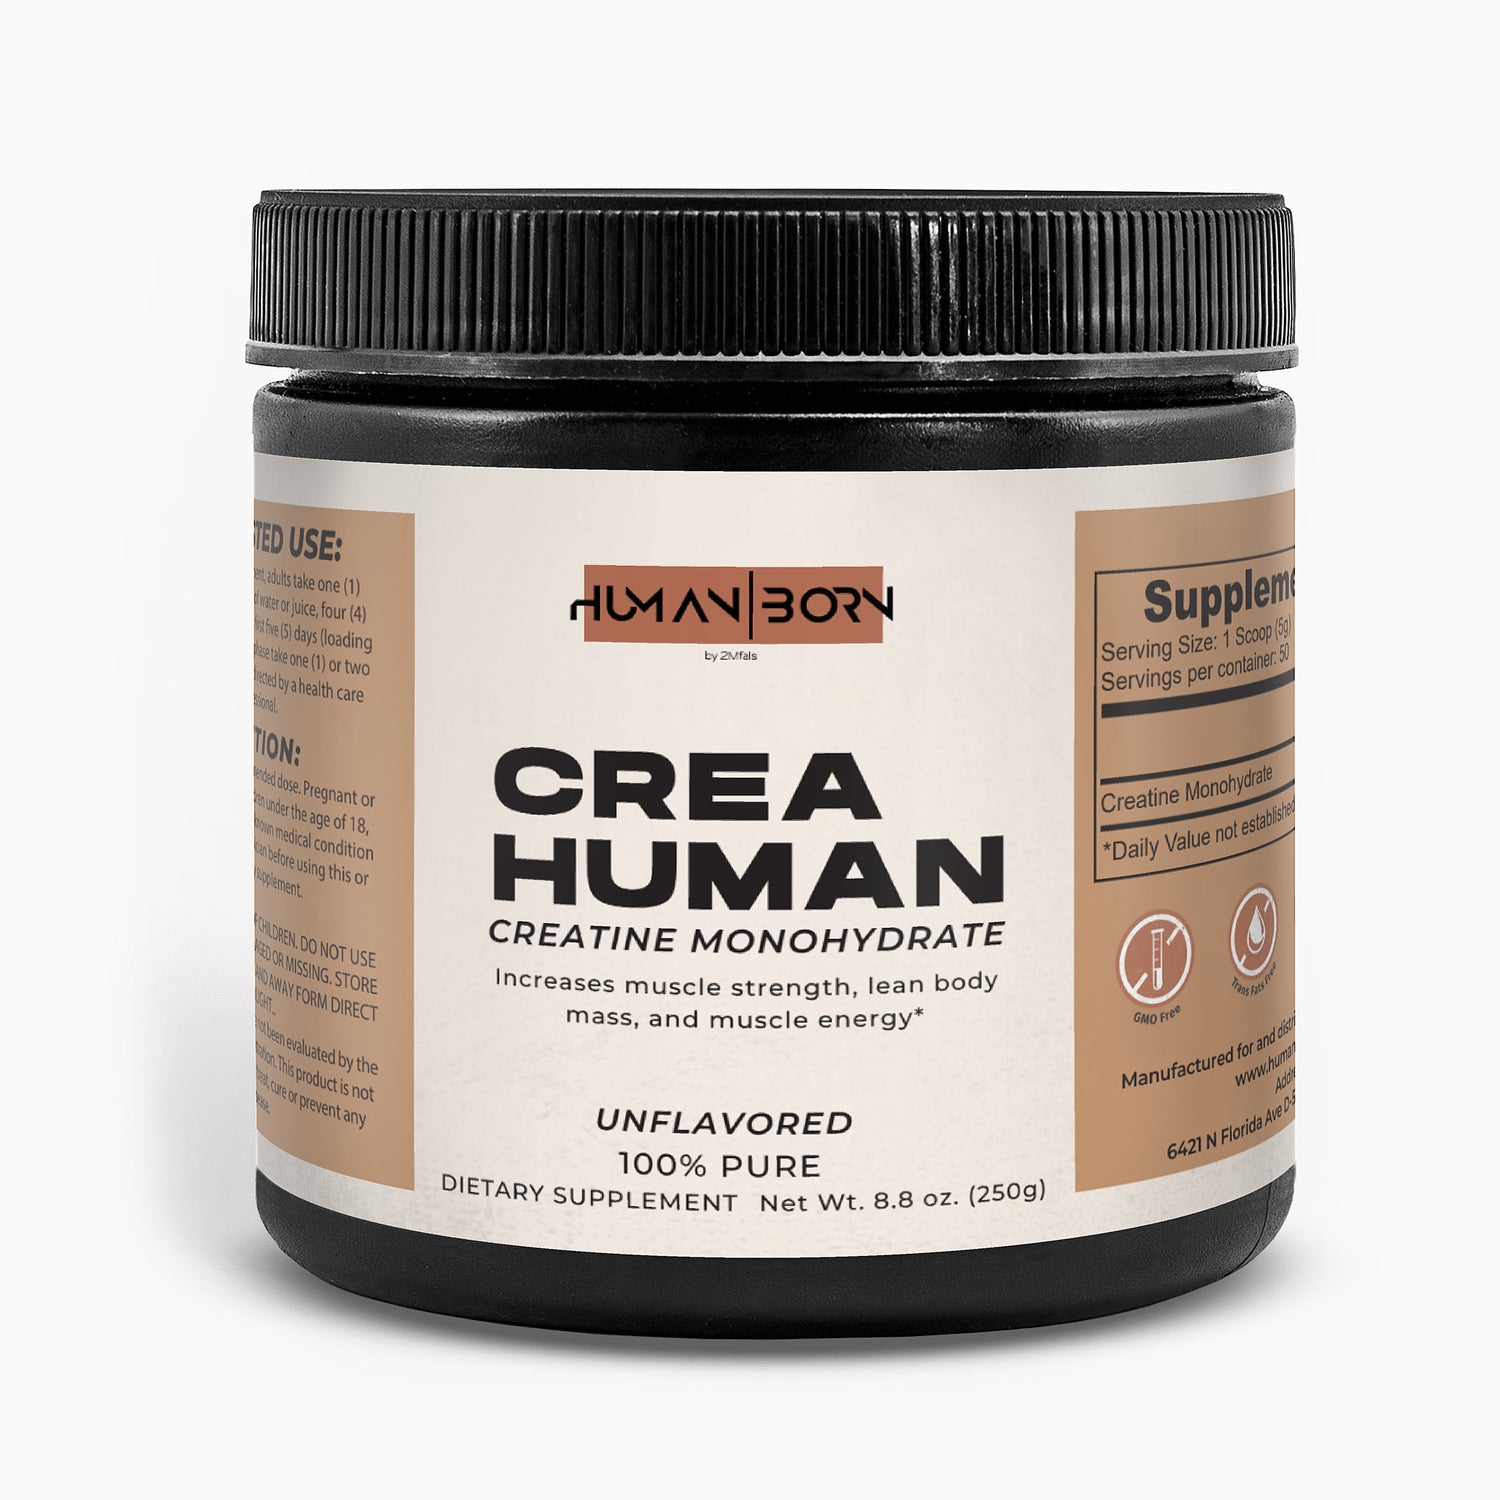 HumanBorn Supplements